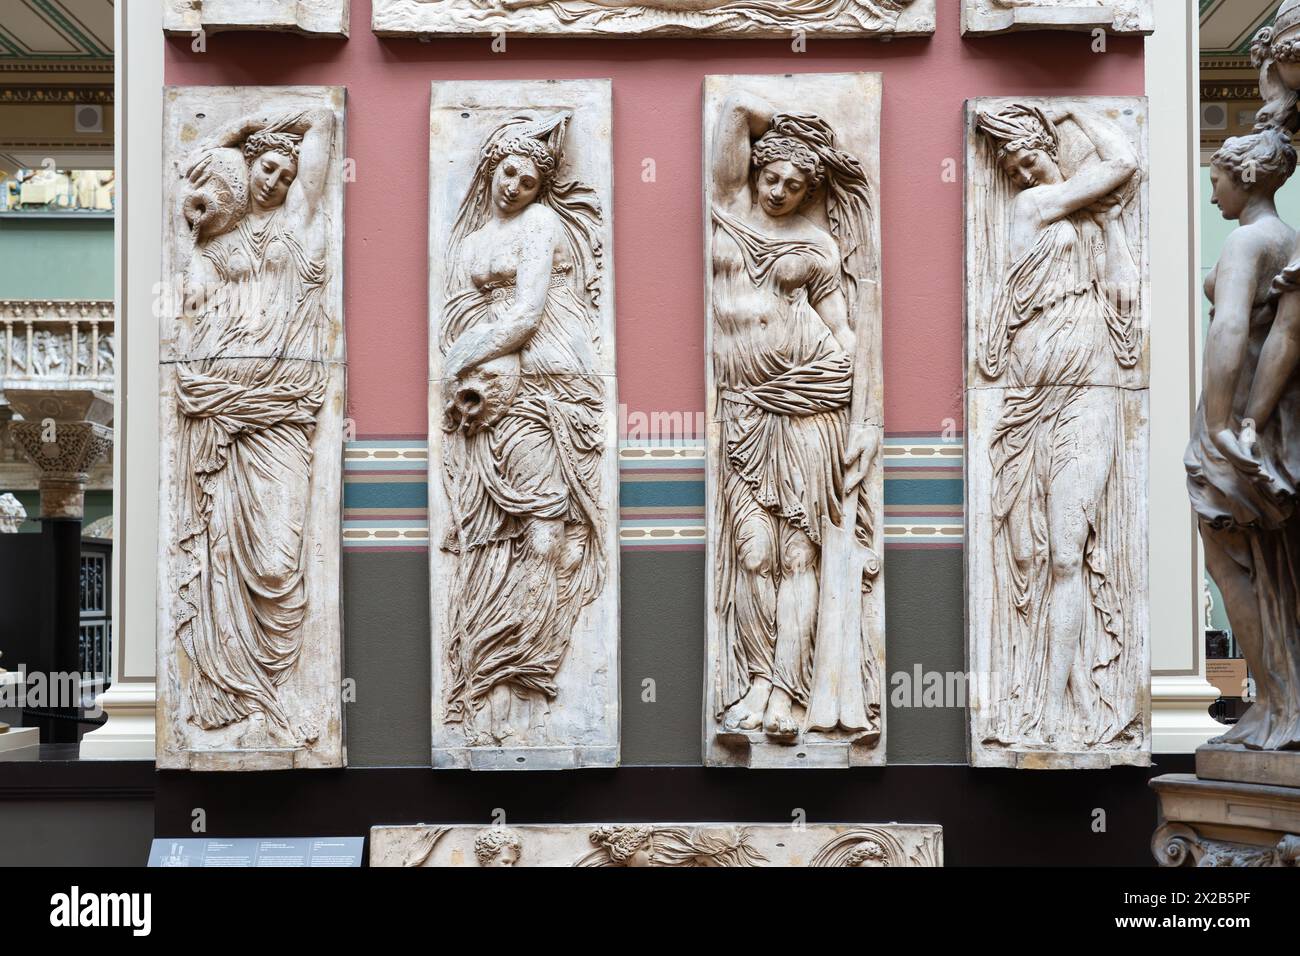 Riproduzioni in gesso di rilievi in pietra di Ninfe d'acqua e Putti 1547-49. Gli originali erano la decorazione di una fontana pubblica a Parigi. V&A, Londra Foto Stock